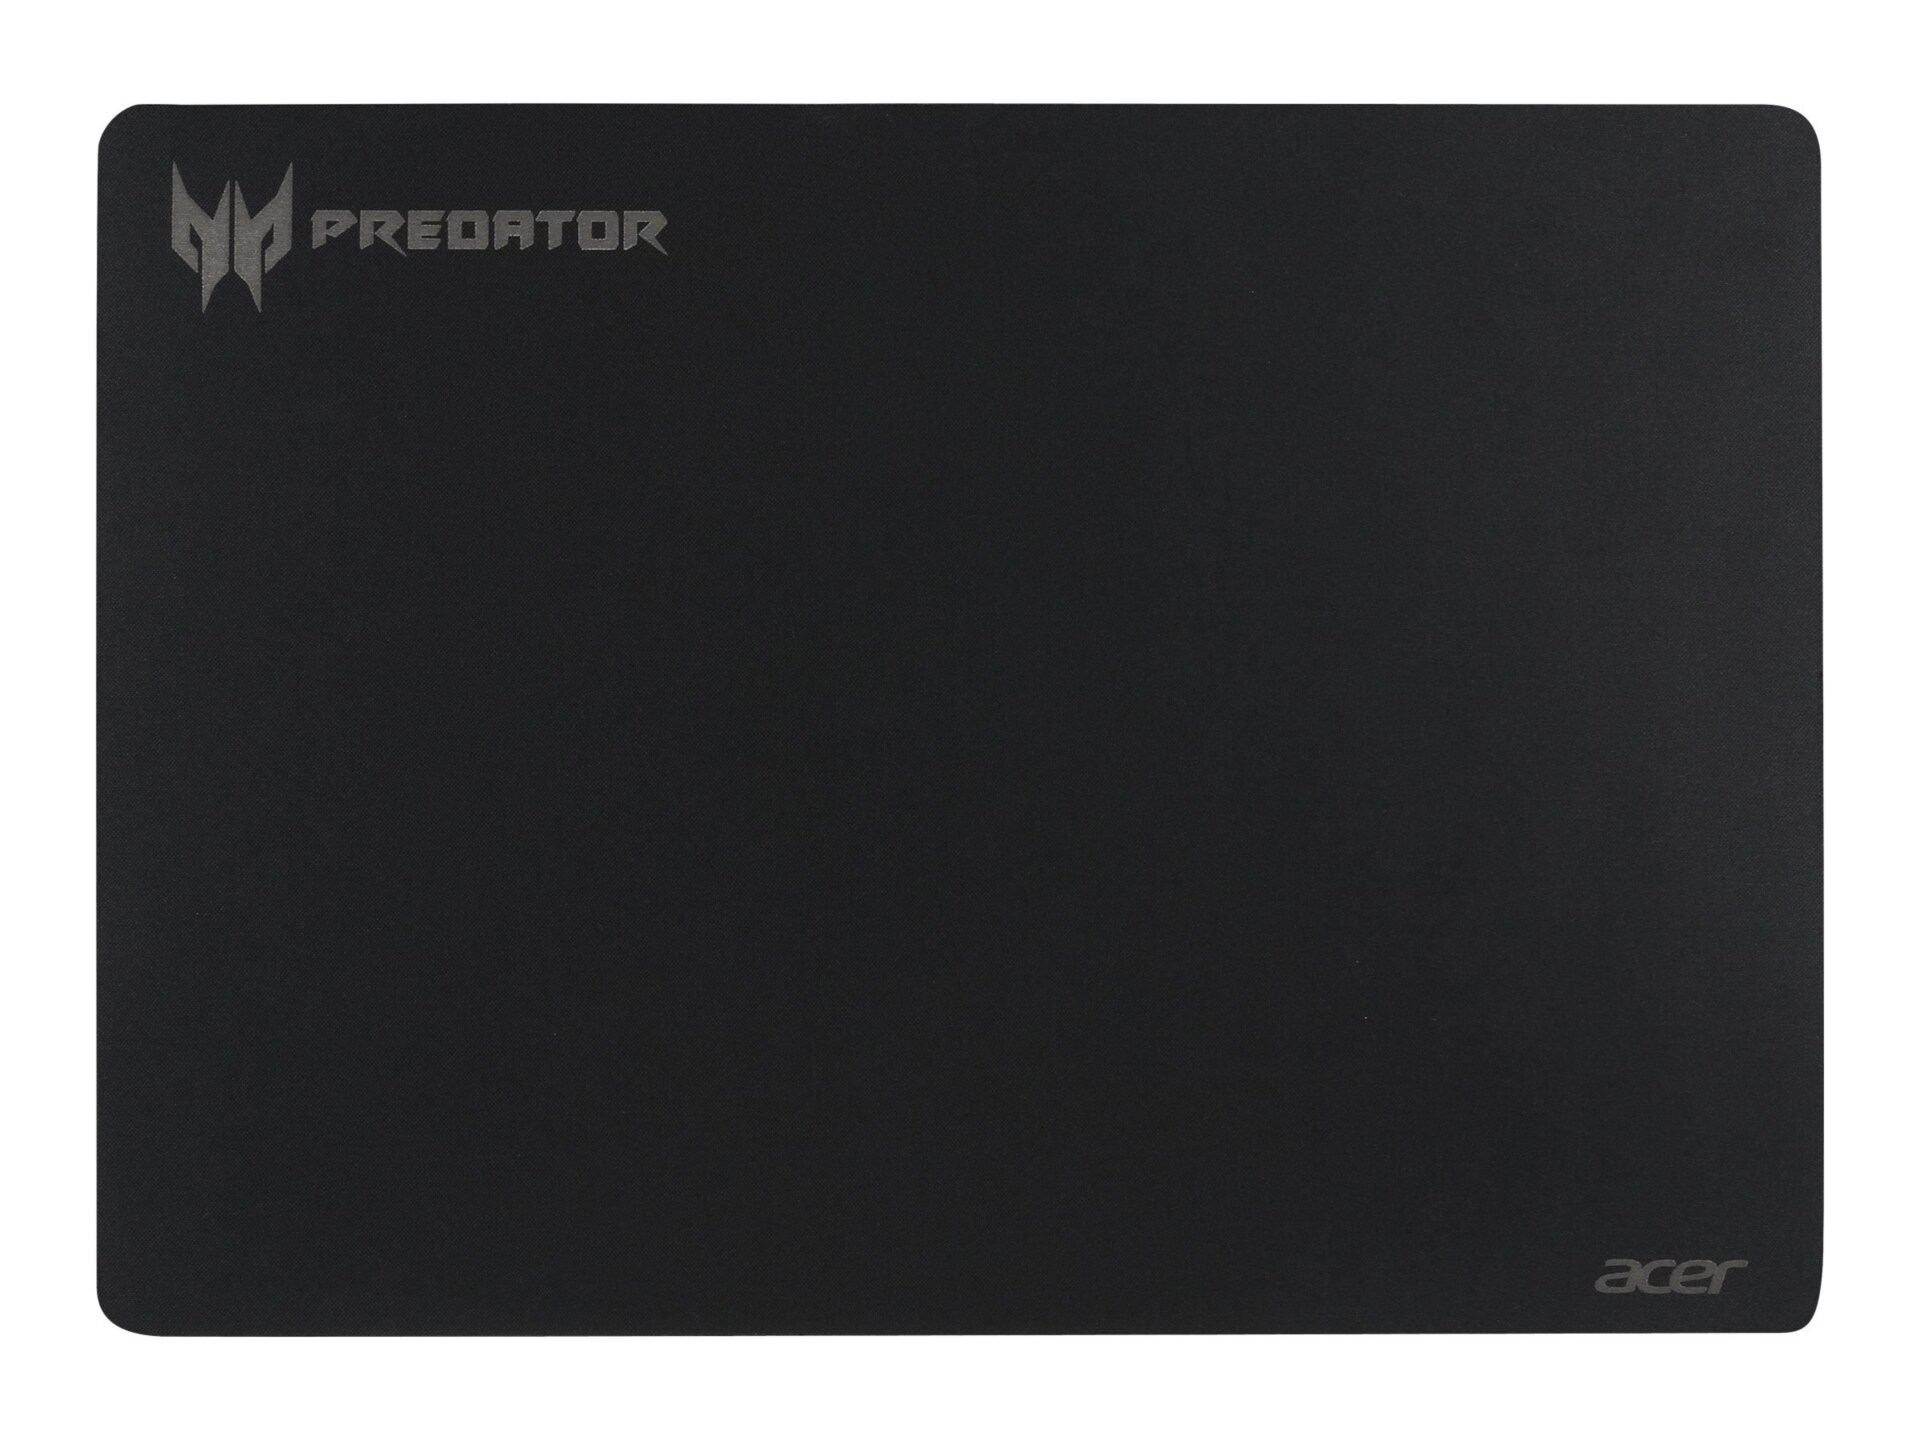 Acer Predator Gaming PMP510 - mouse pad